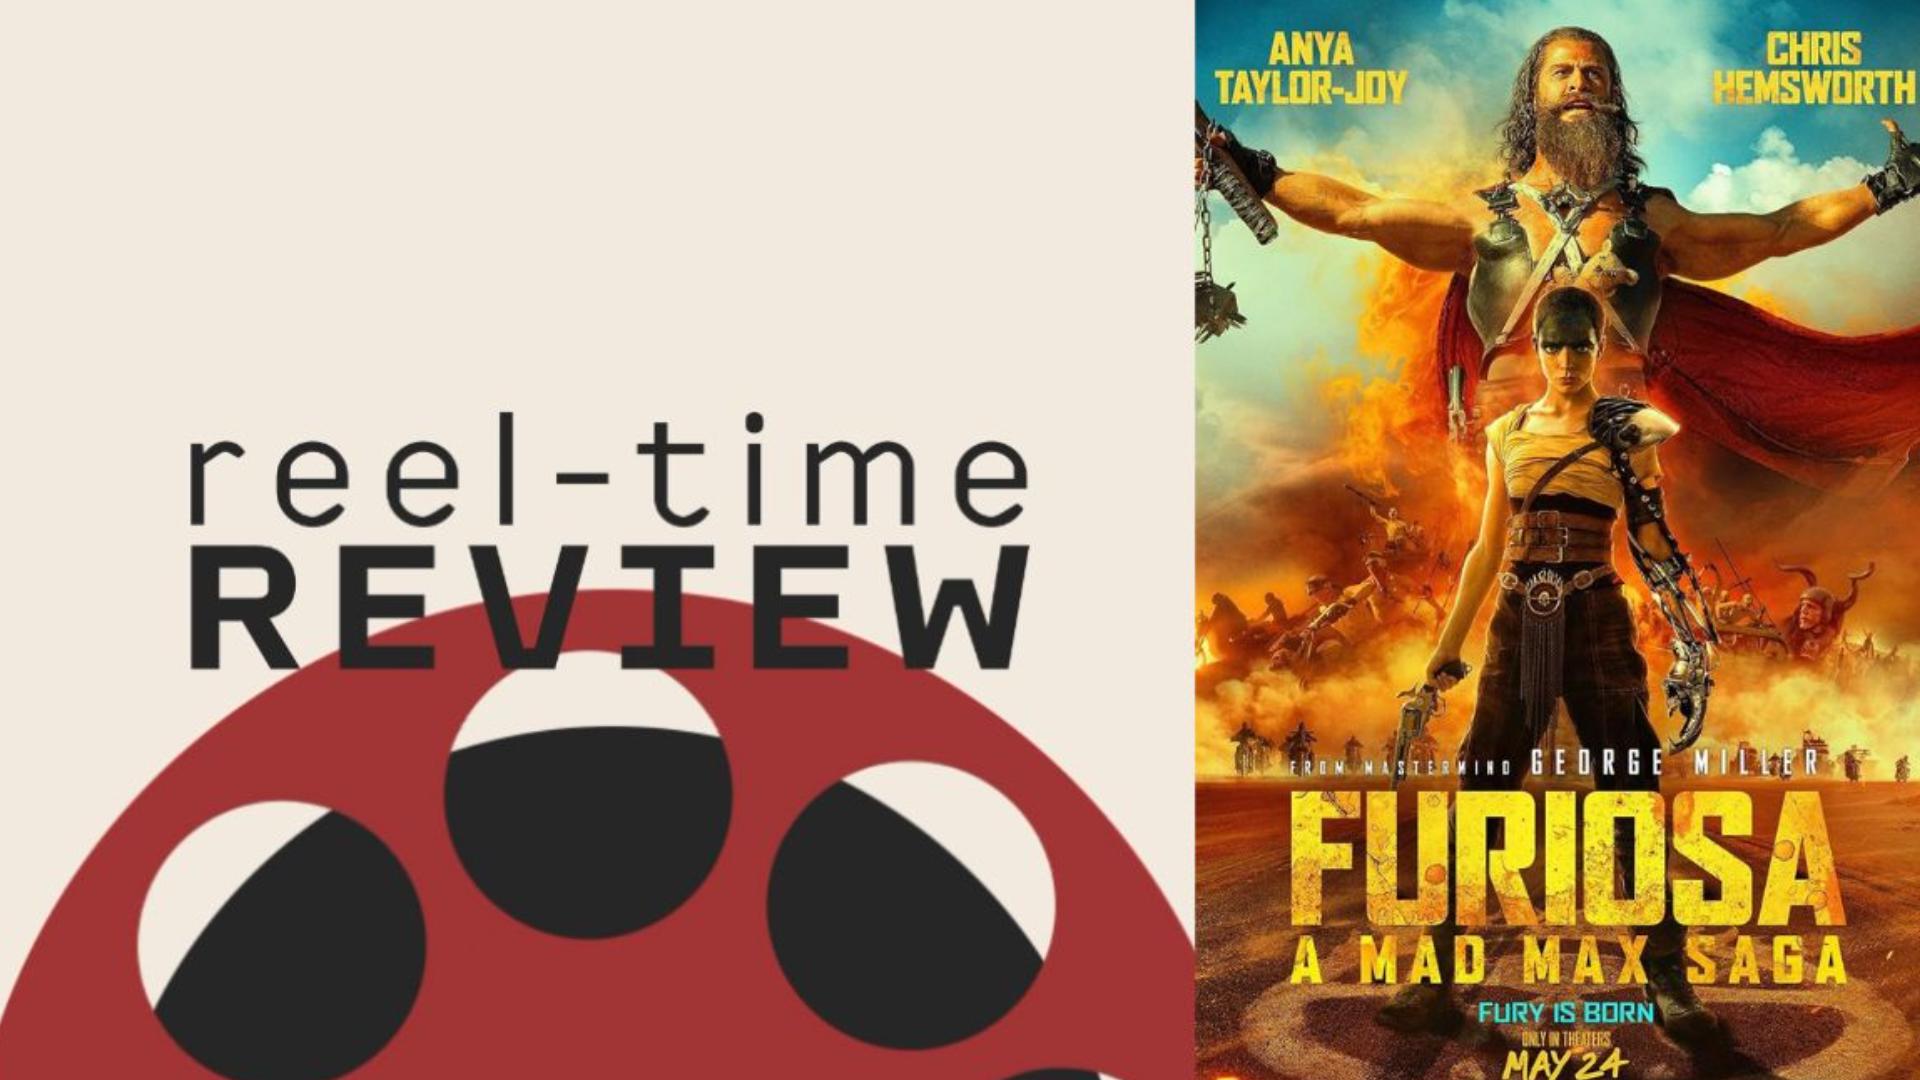 Atlanta film critics Jesse Nussman and Jason Evans discuss the latest installment in George Miller's acclaimed "Mad Max" saga.